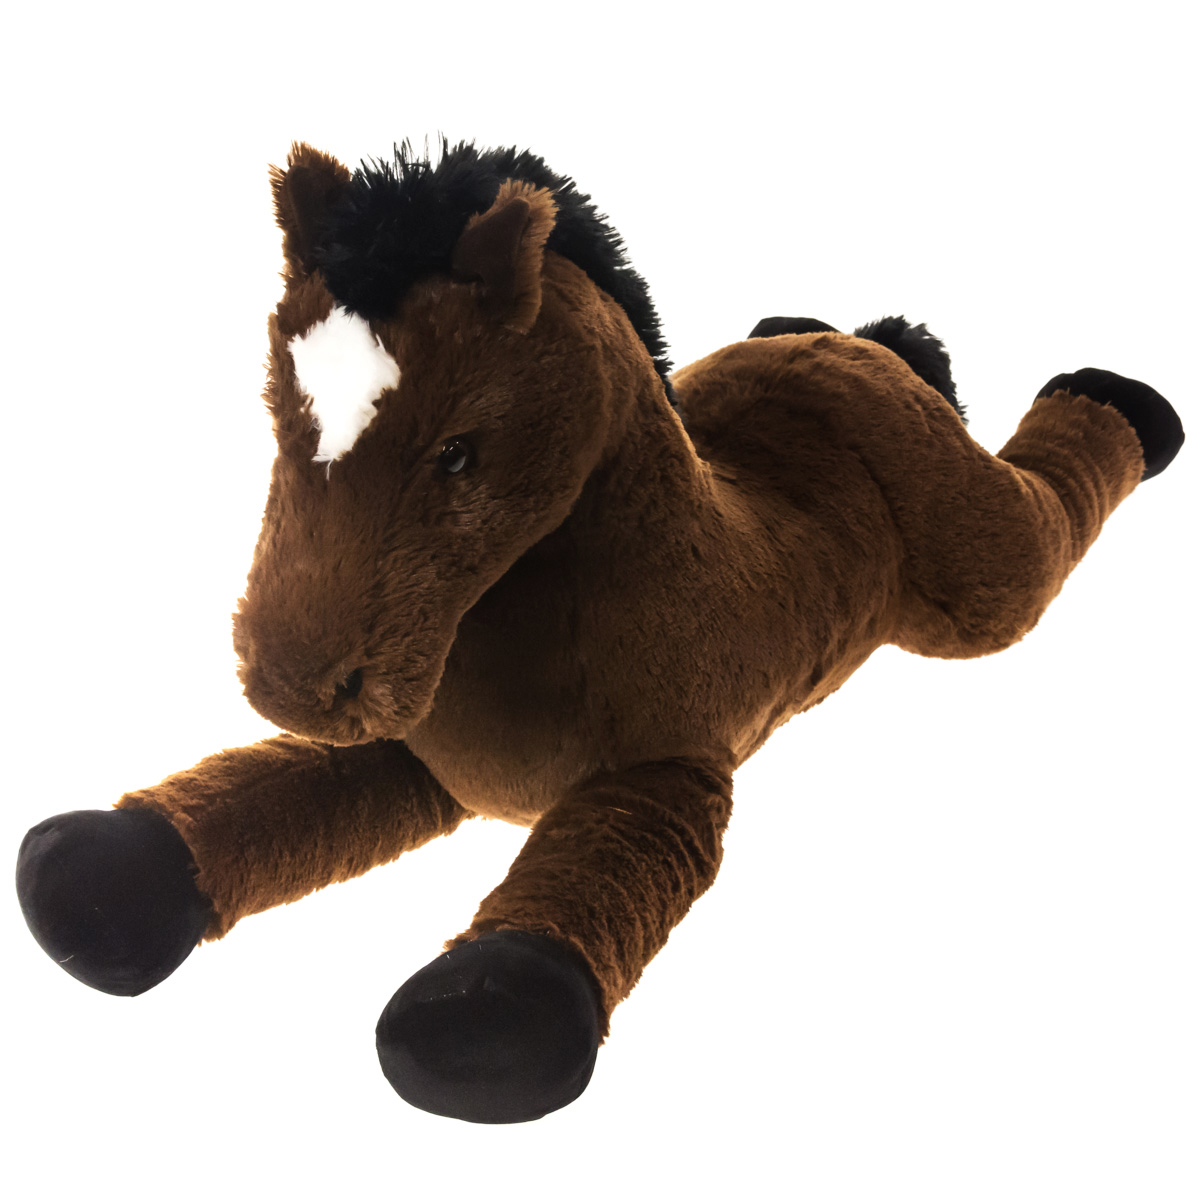 big horse stuffed animal